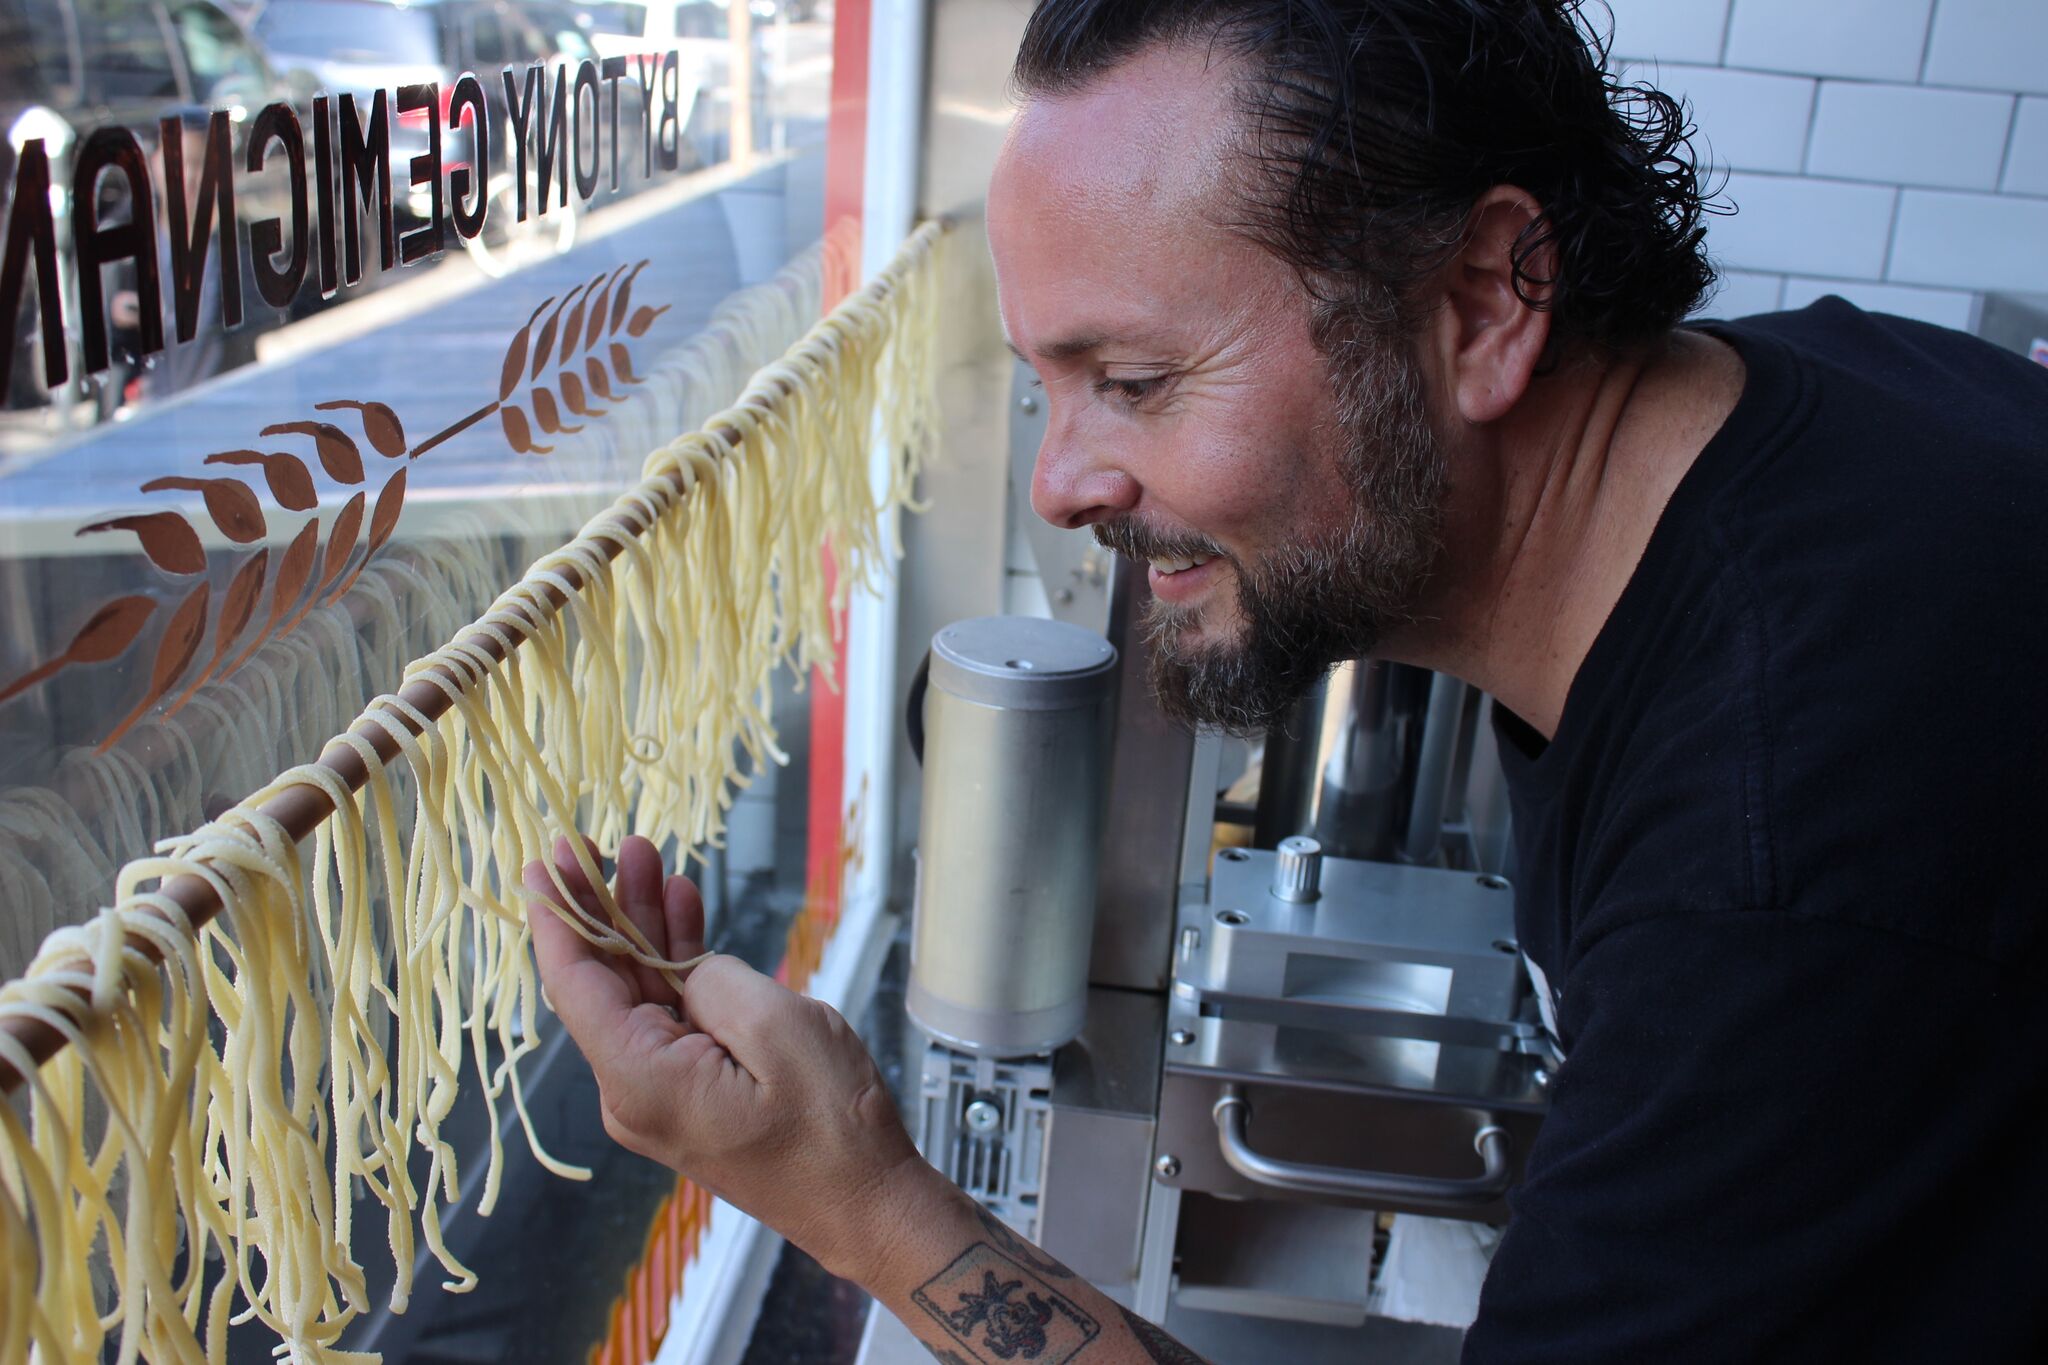 Gemignani checks on the drying pasta